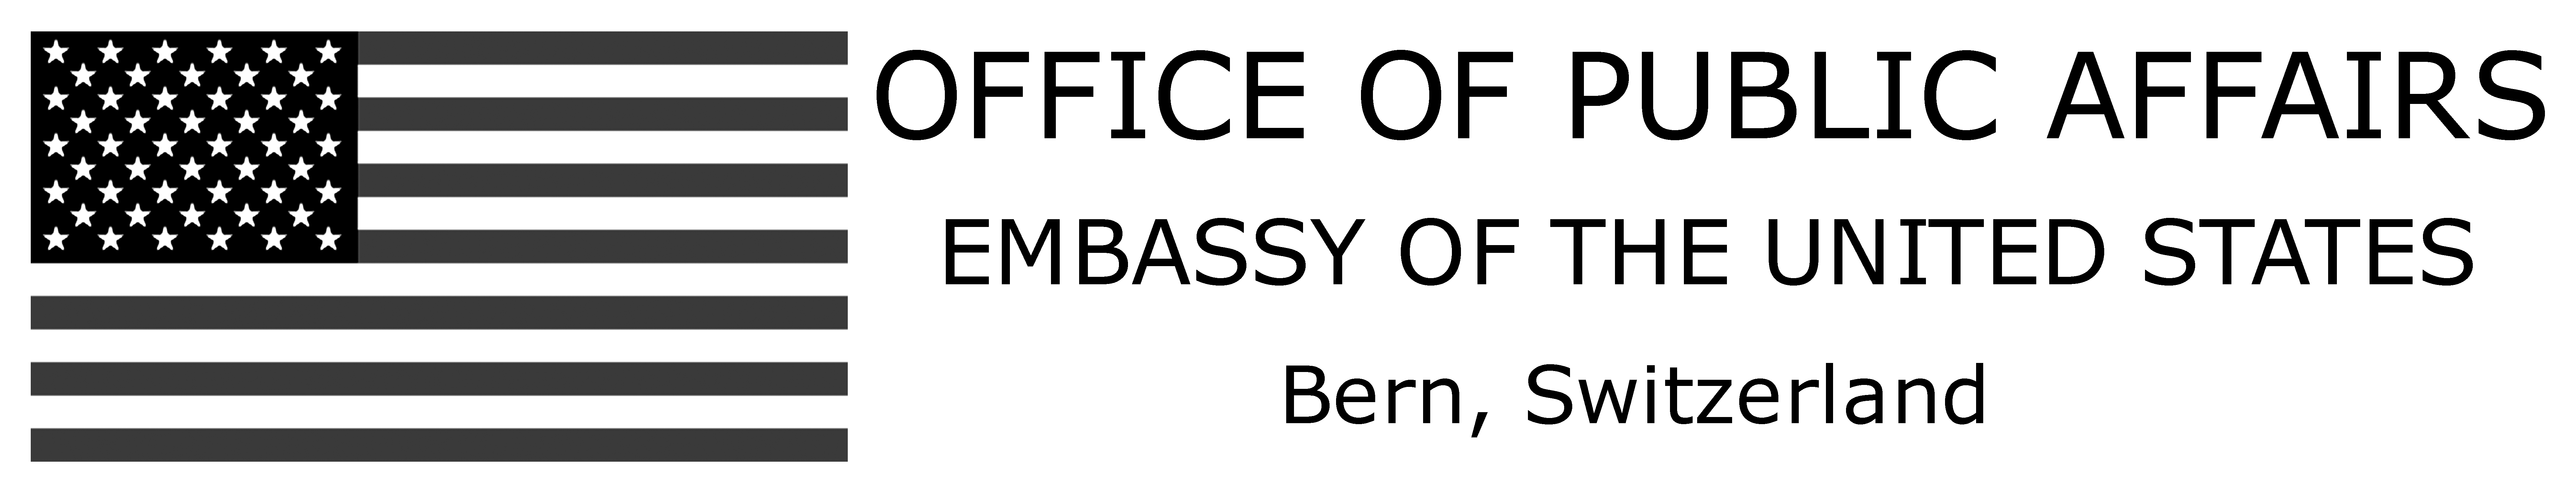 1 US Embassy